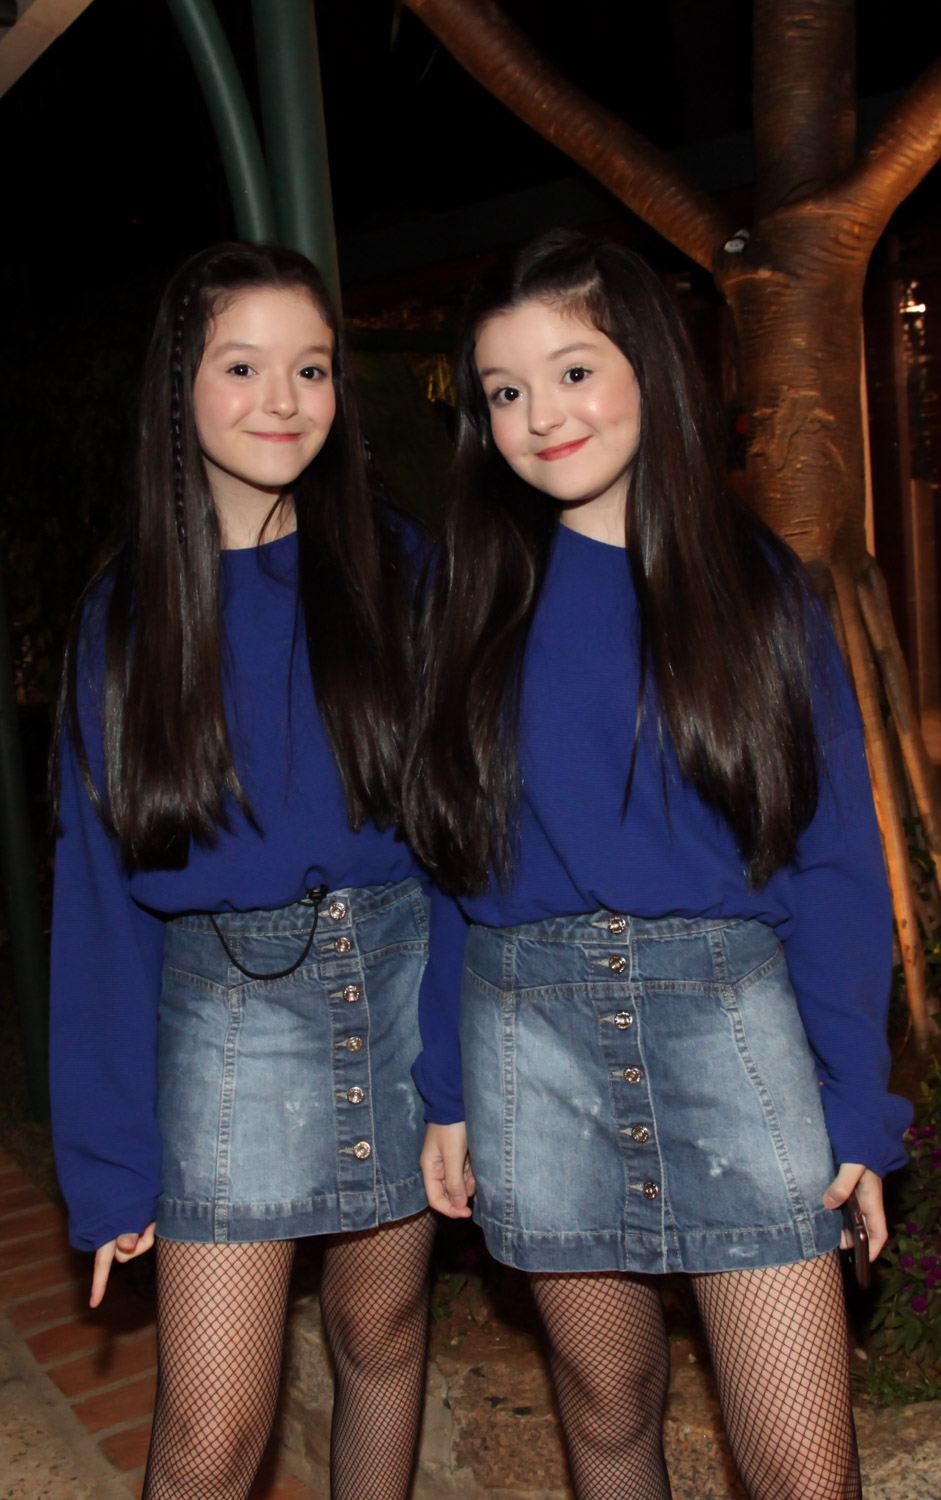 As gêmeas Mariany e Camily Vitória